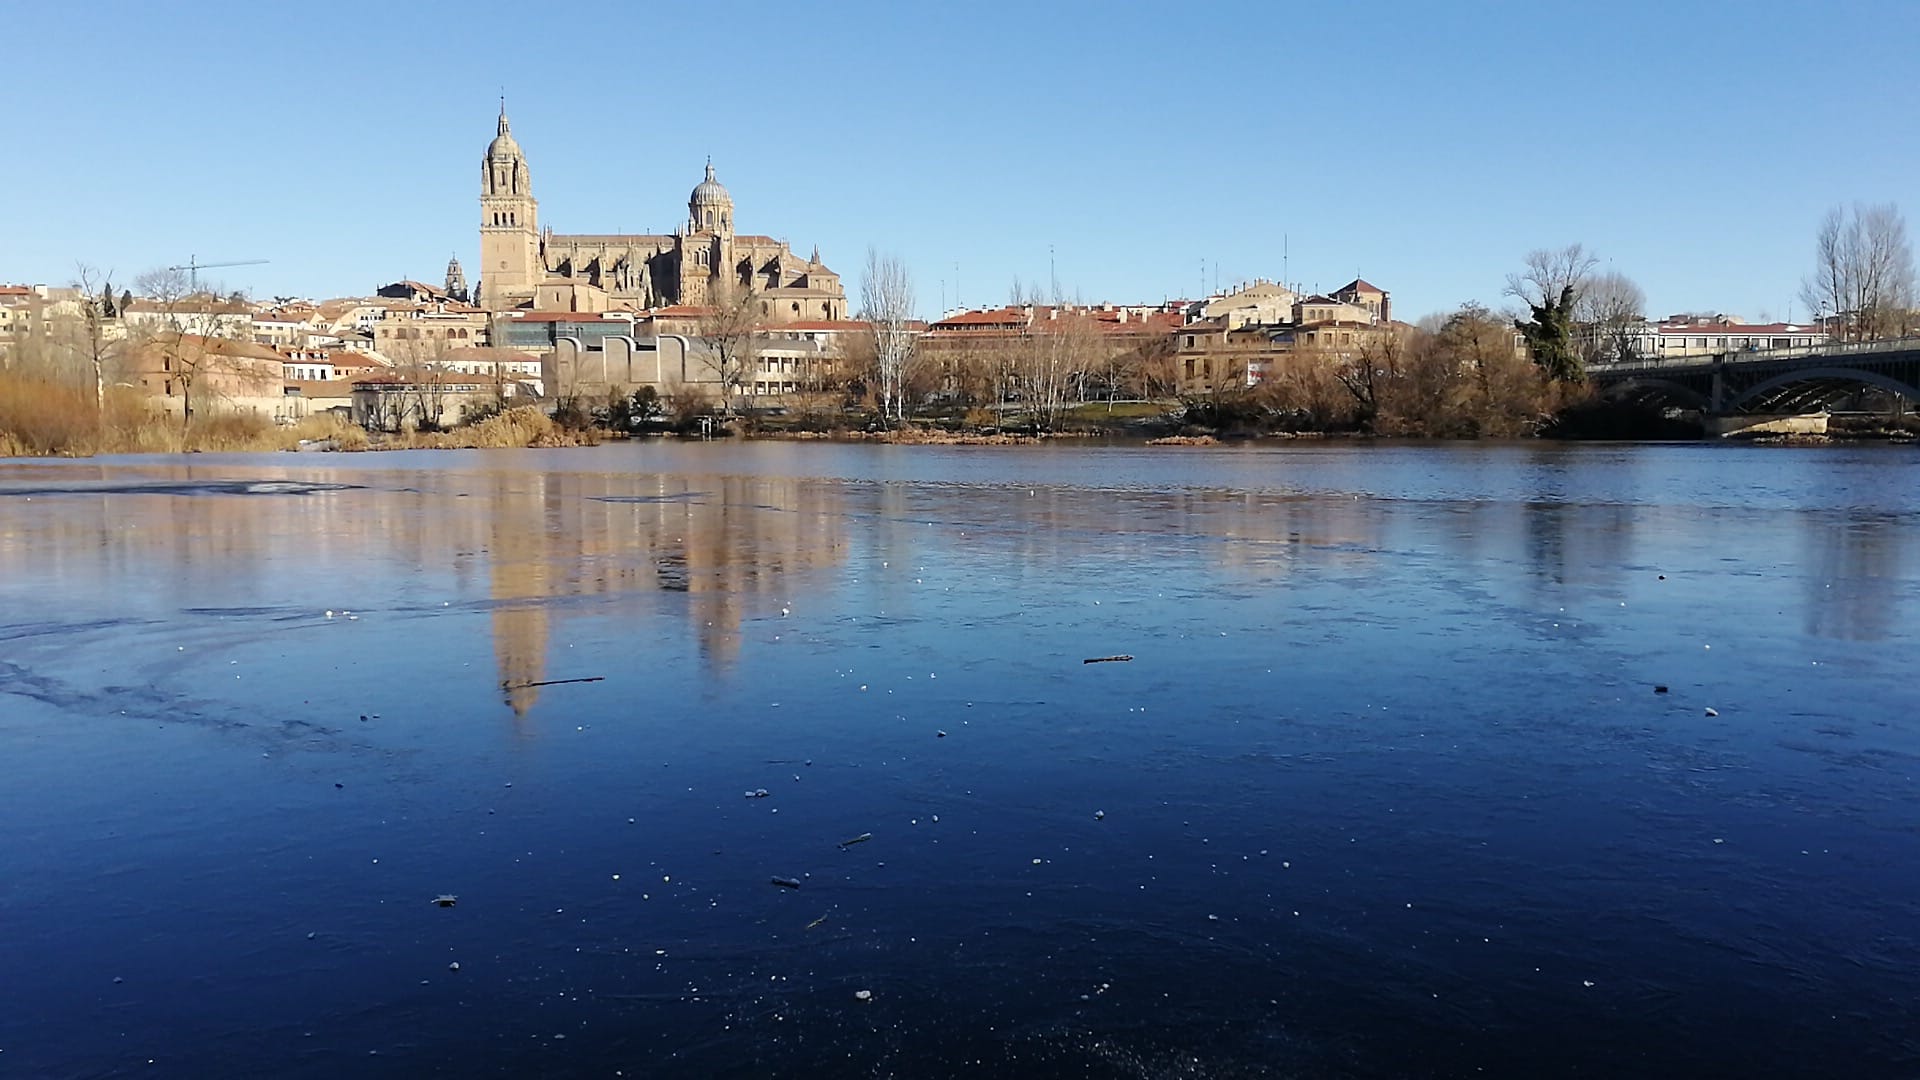 La postal de Salamanca, con las catedrales reflejadas en el agua del Tormes, helada.